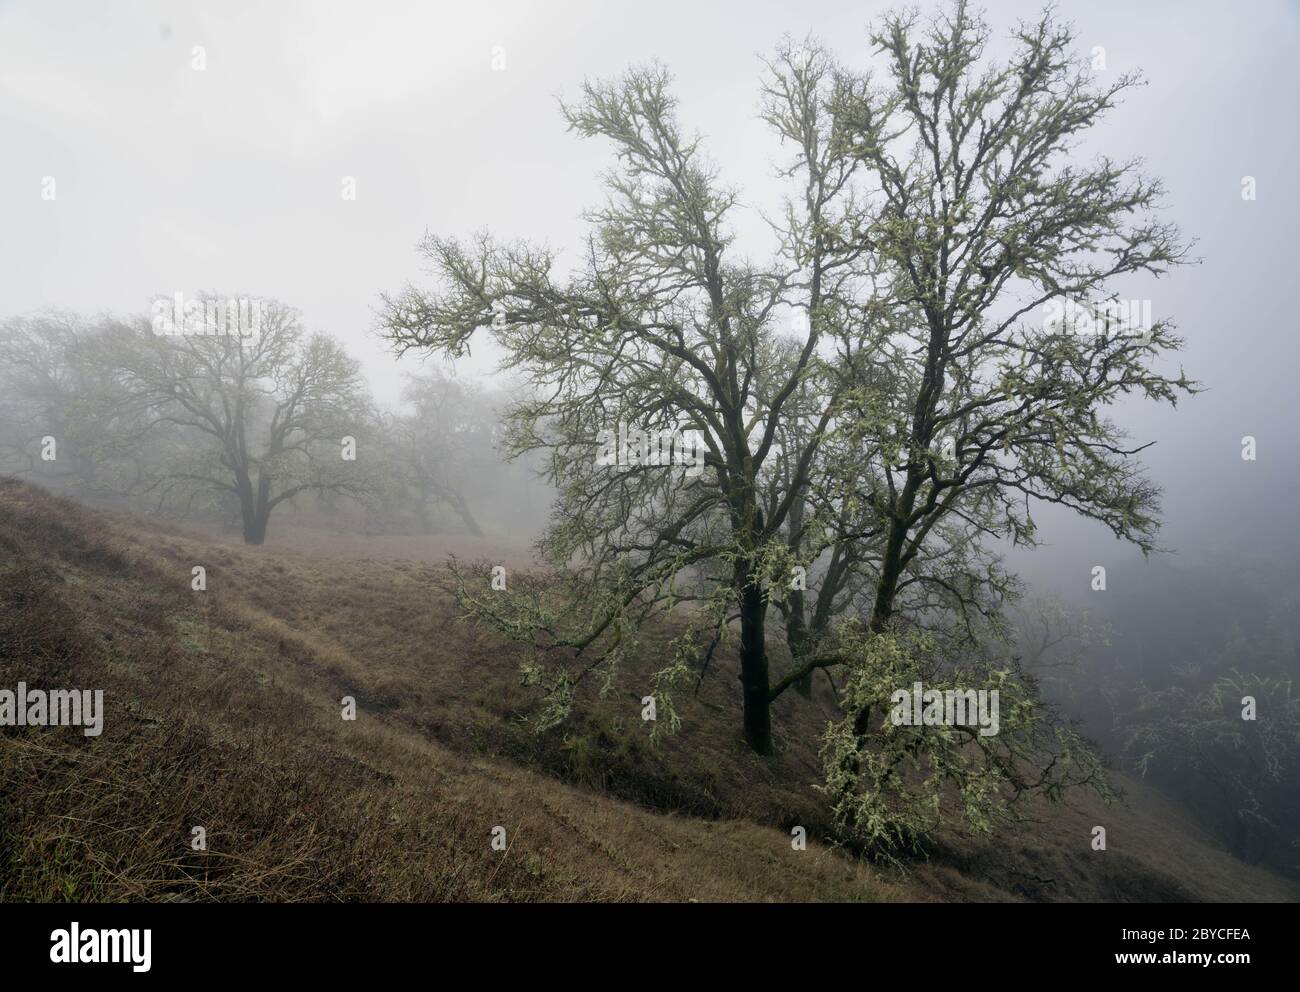 oak trees in a foggy morning in the hills outside of Ukiah, CA Stock Photo